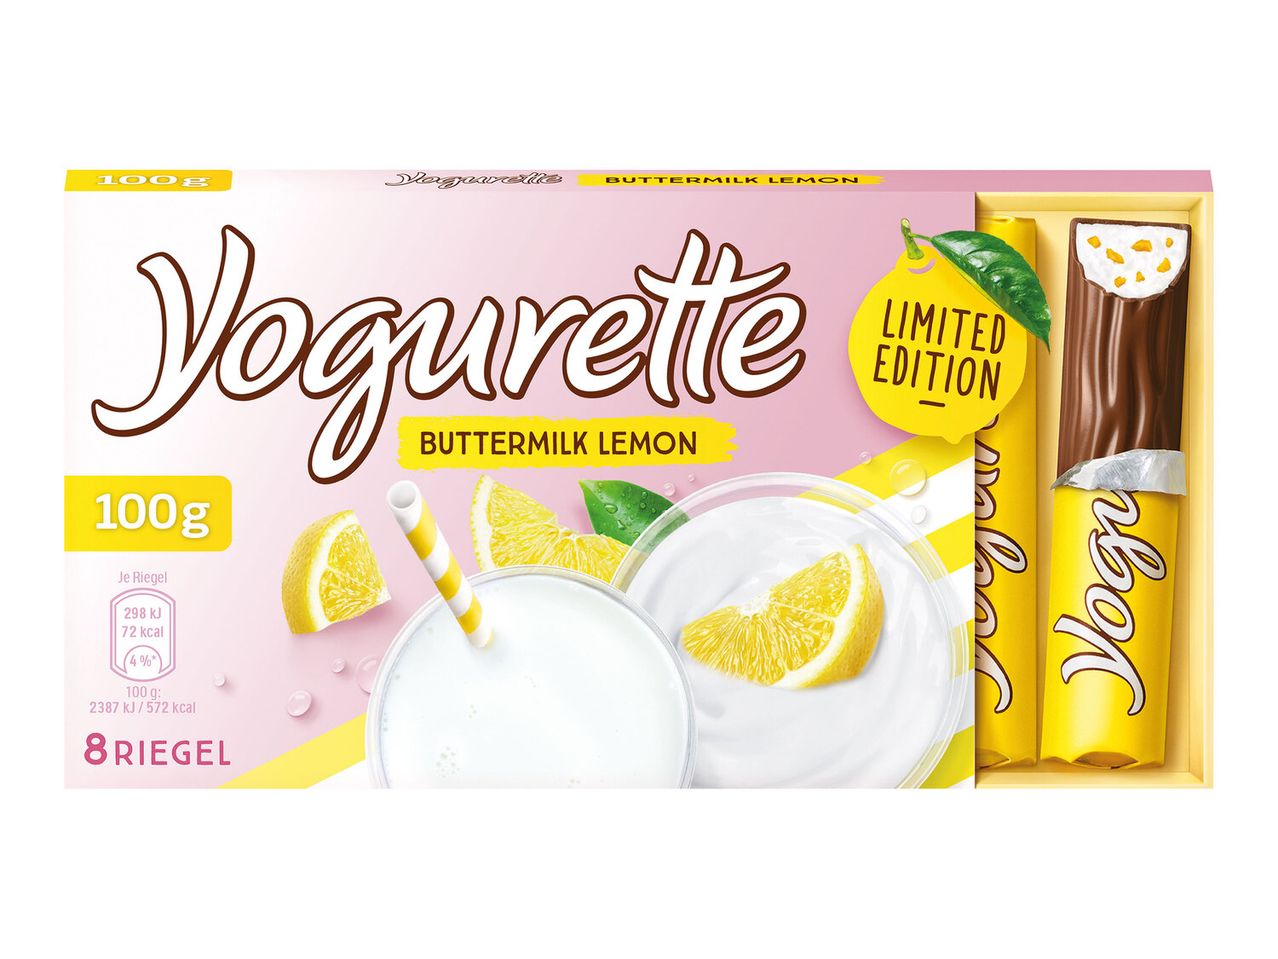 Lemon Buttermilk Yogurette